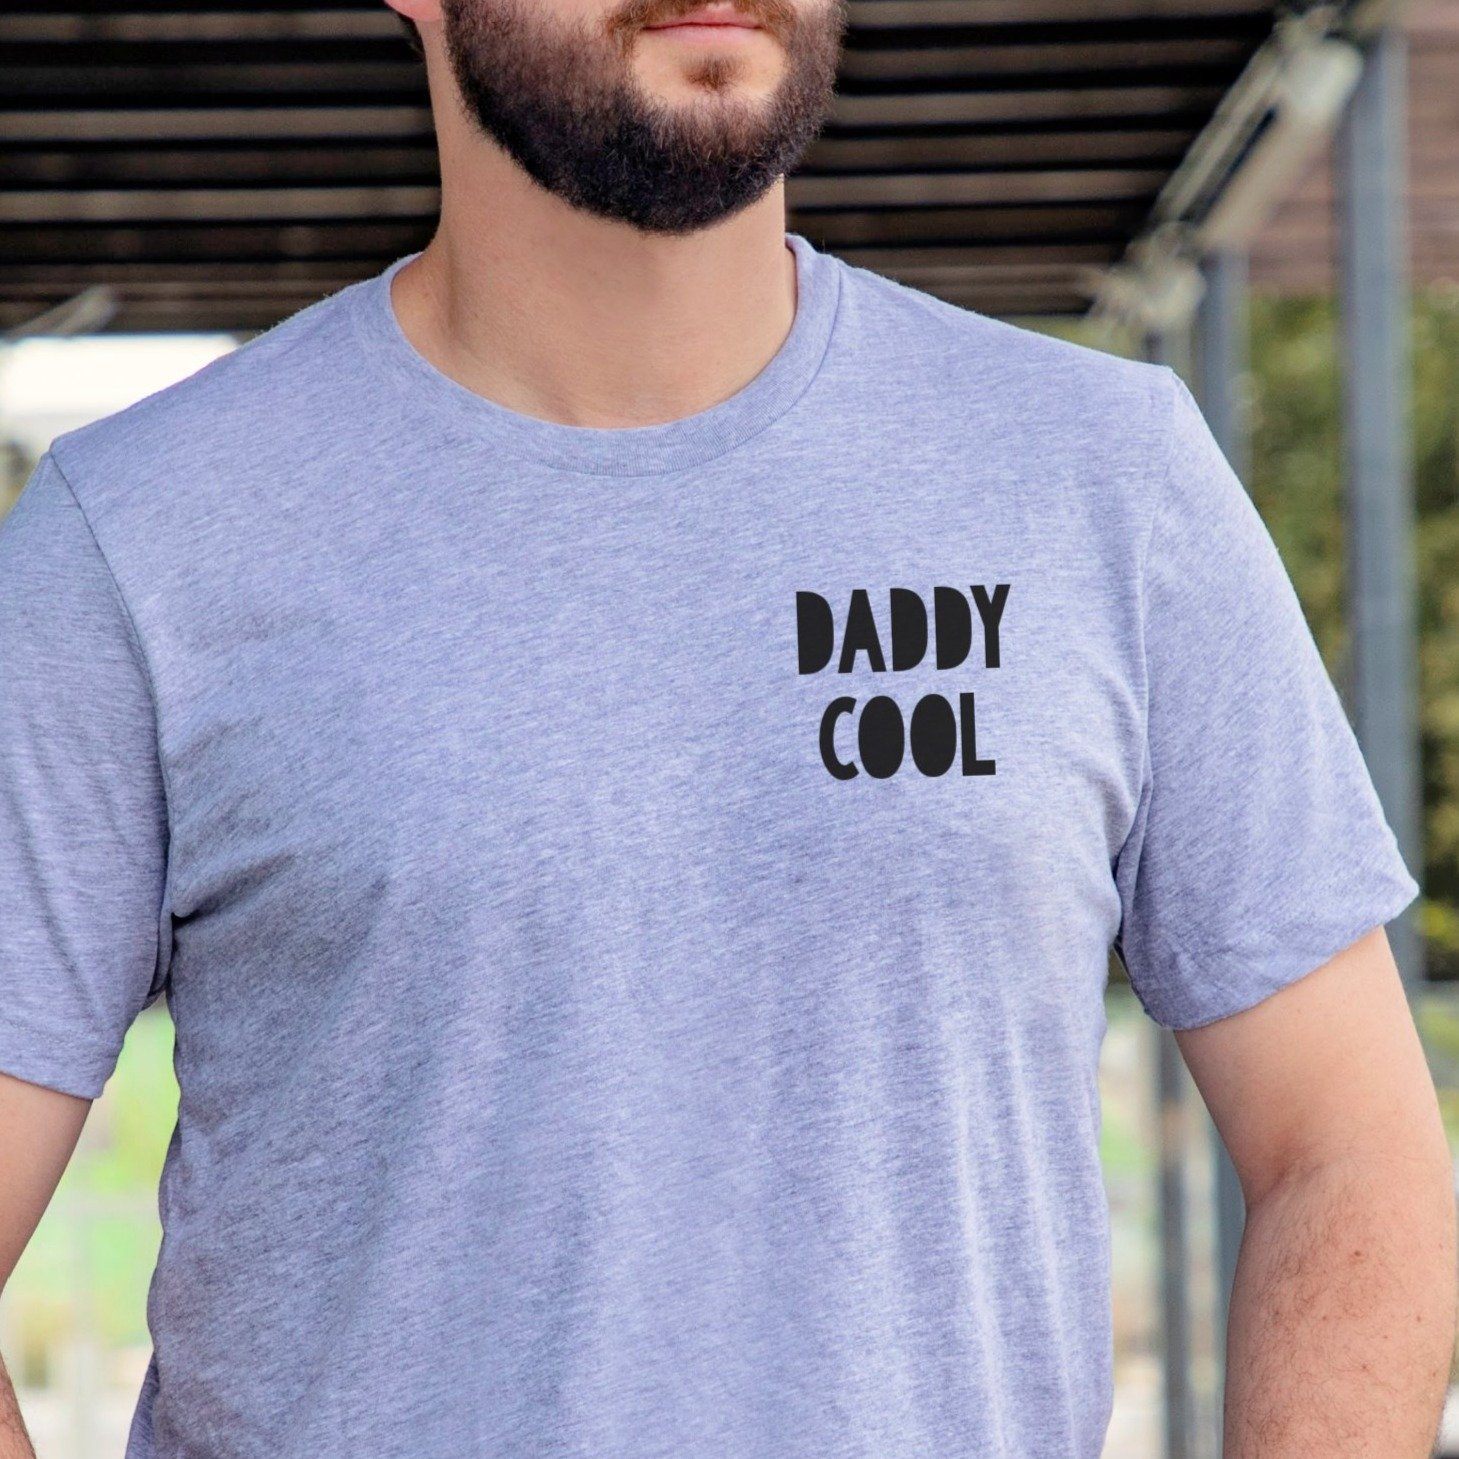 Misforståelse opføre sig padle Daddy Cool Men's T Shirt | Betty Bramble